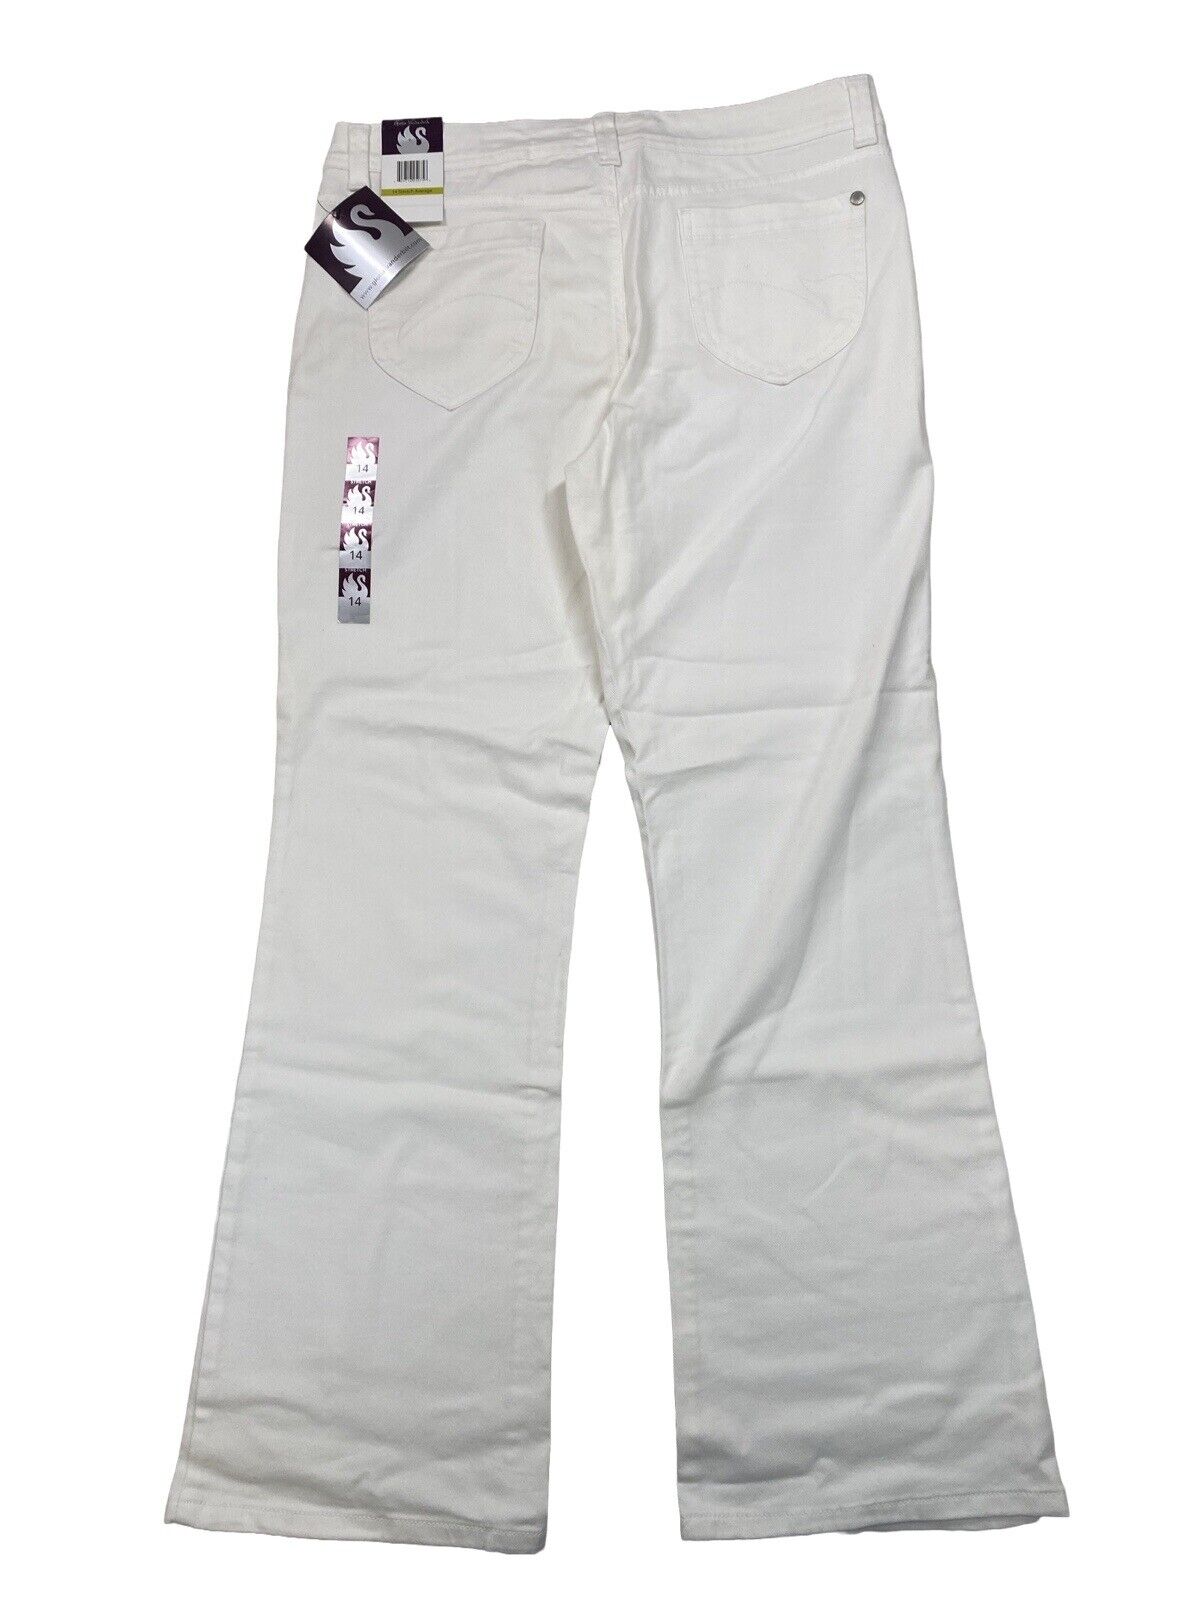 NEW Gloria Vanderbilt Women's White Stretch Boot Cut Jeans - 14